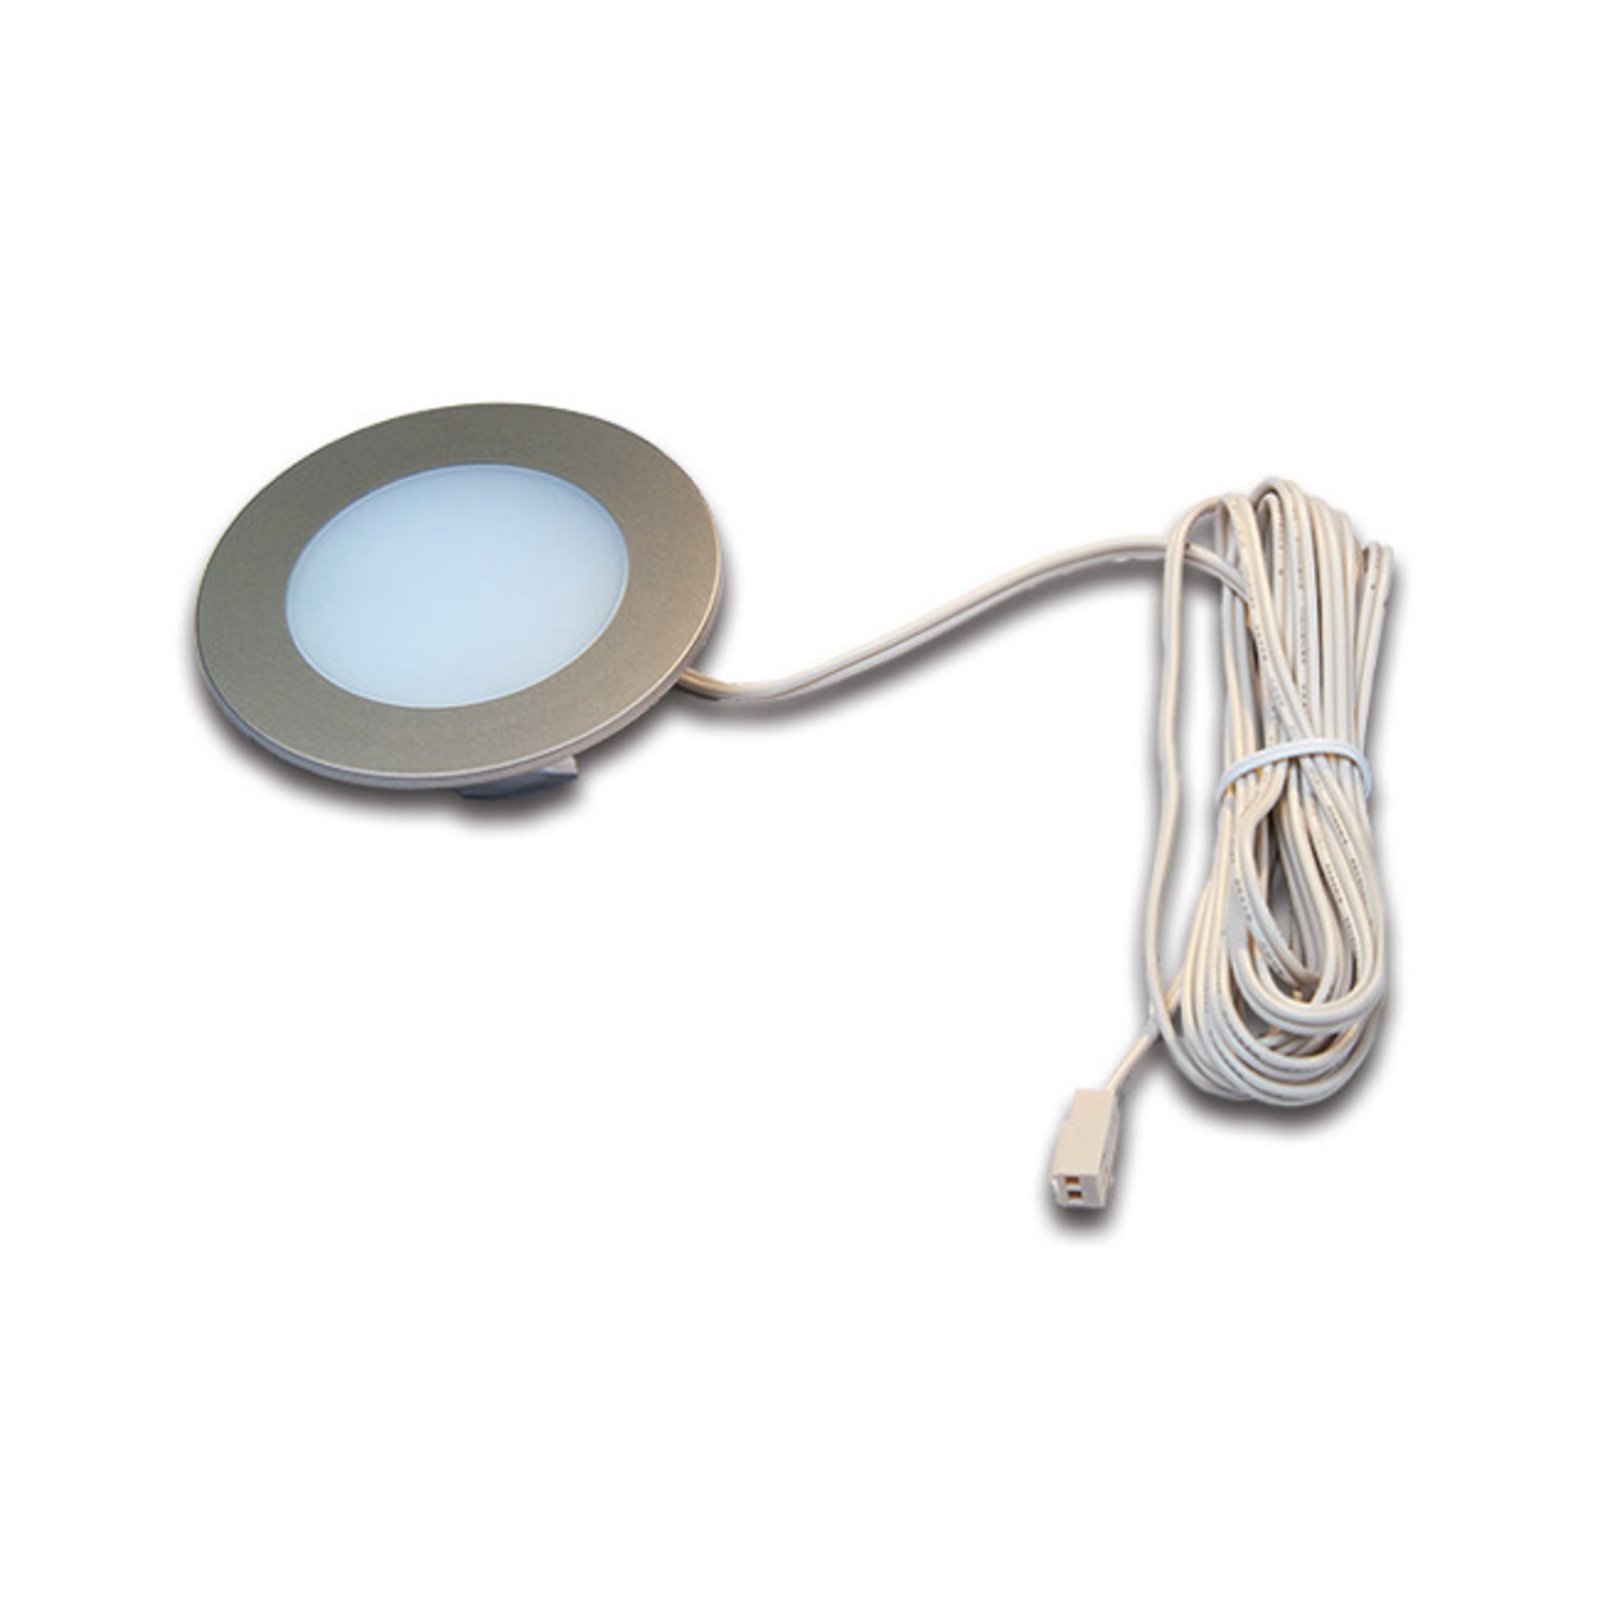 LED-meubellamp FR 55 in roestvrijstalen optiek